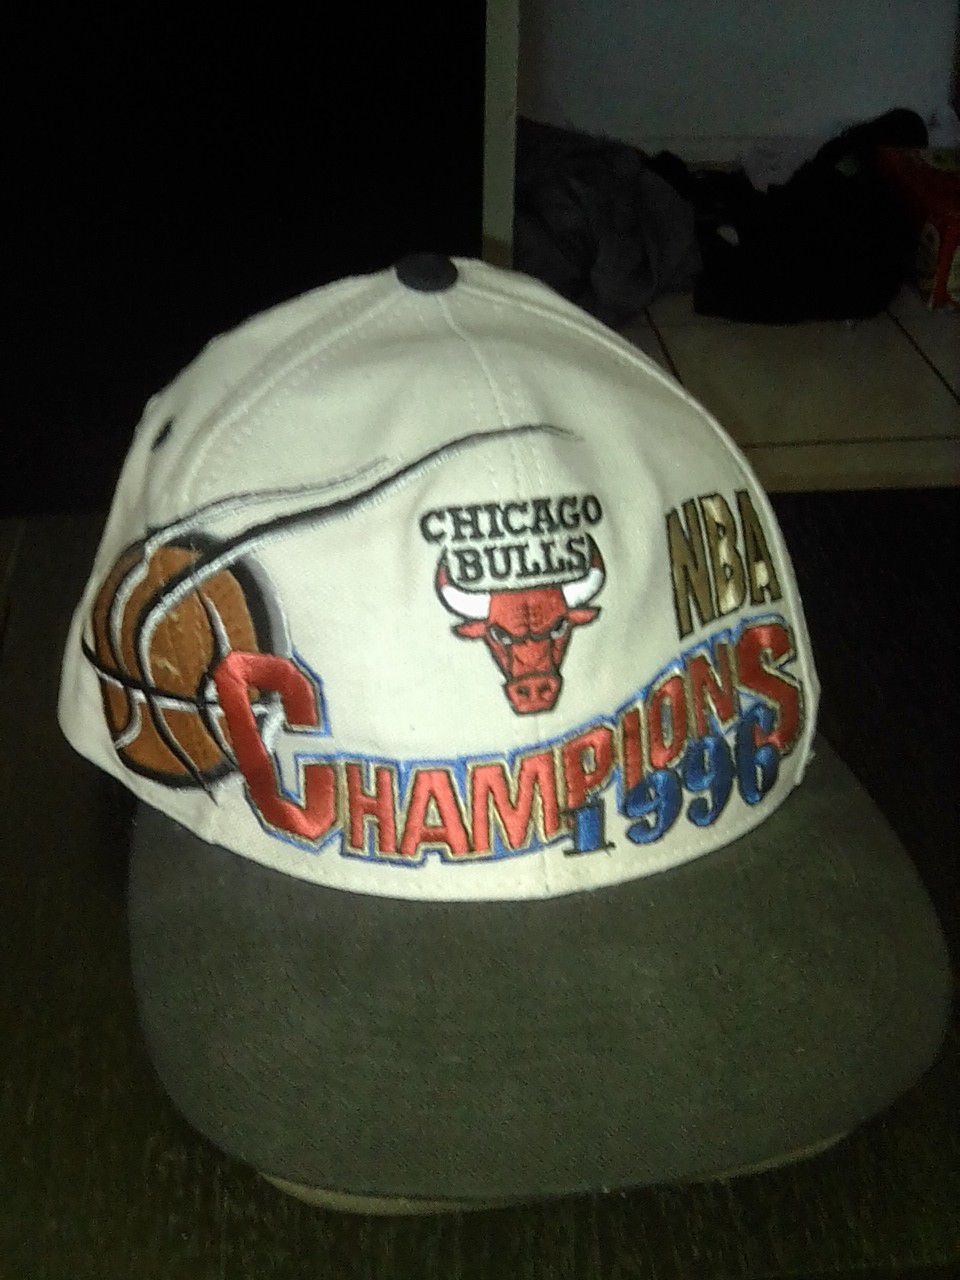 1996 Chicago Bulls Championship game hat